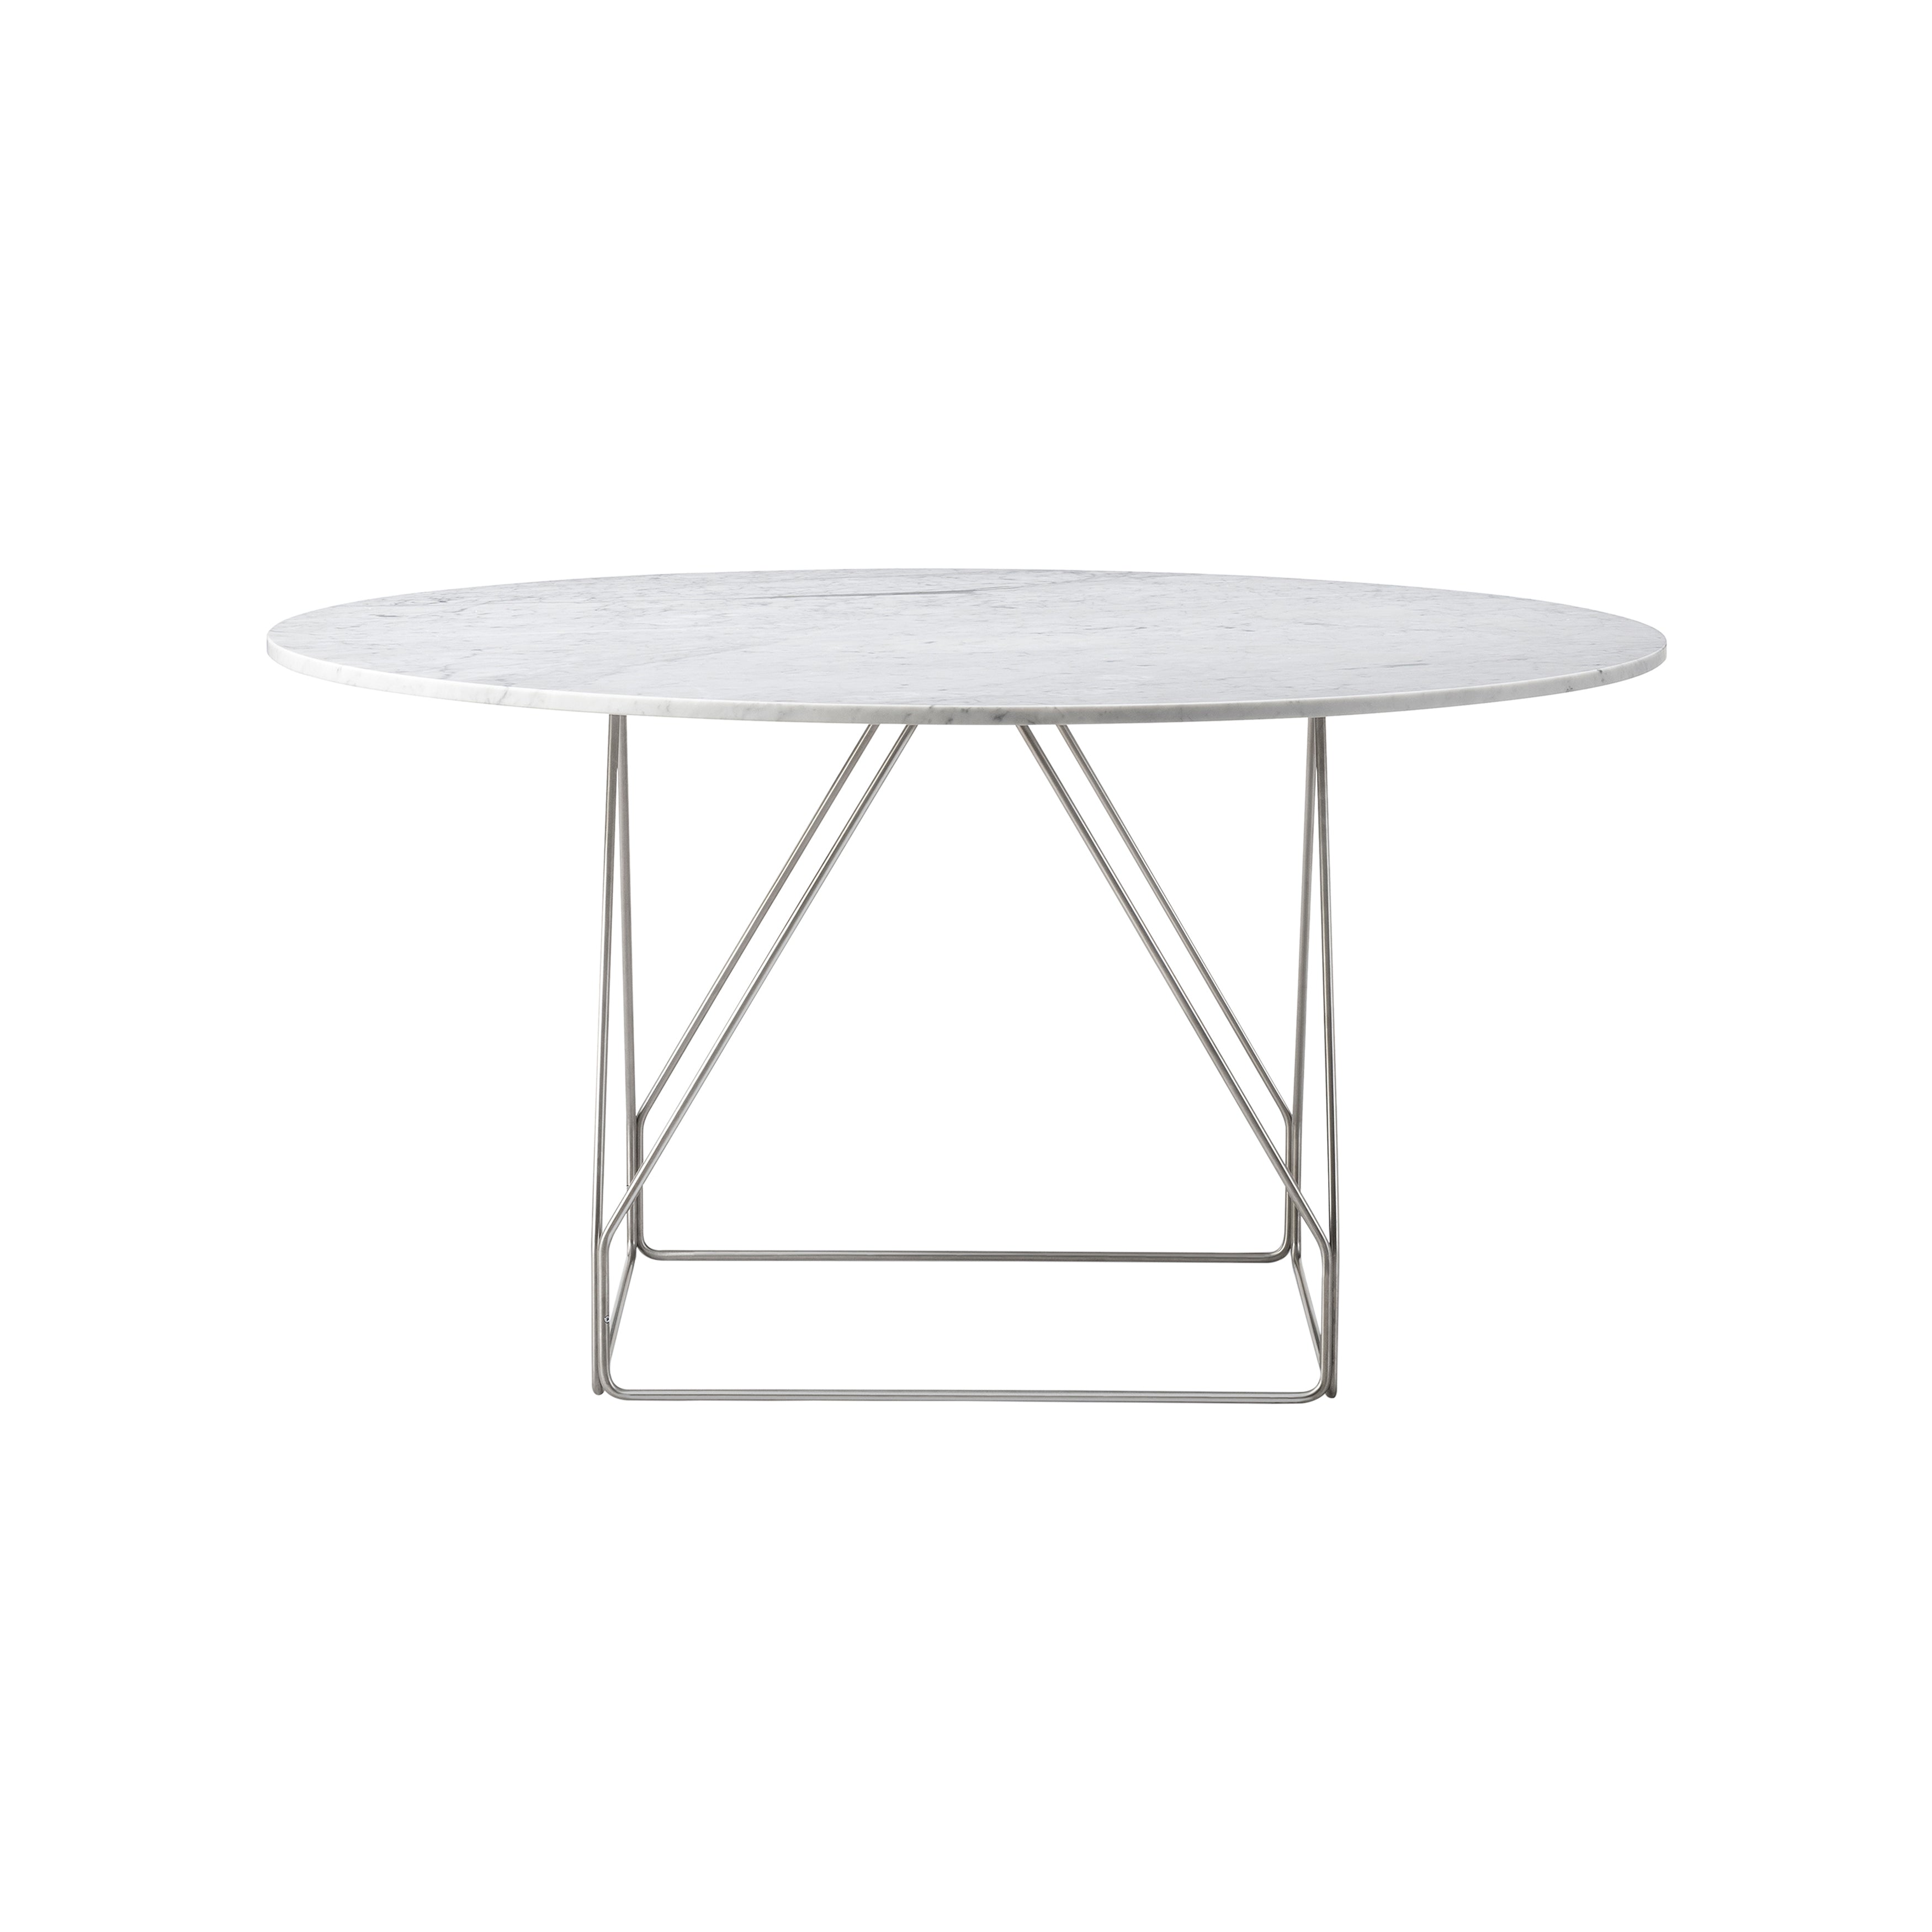 JG Table: Round + White Carrara + Stainless Steel